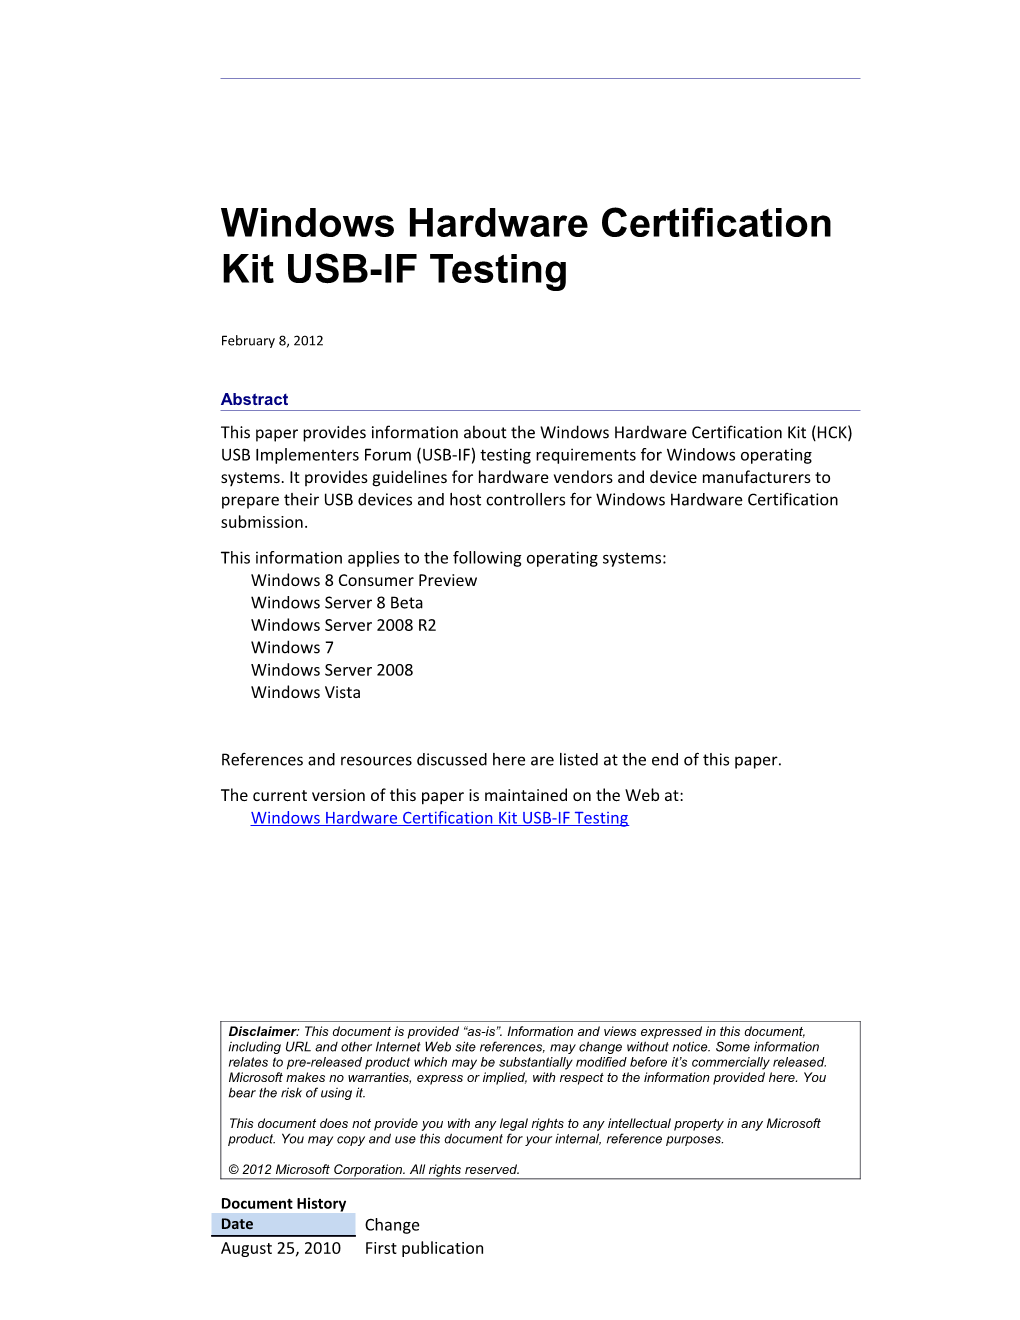 Windows Hardware Certification Kit USB-IF Testing - 1